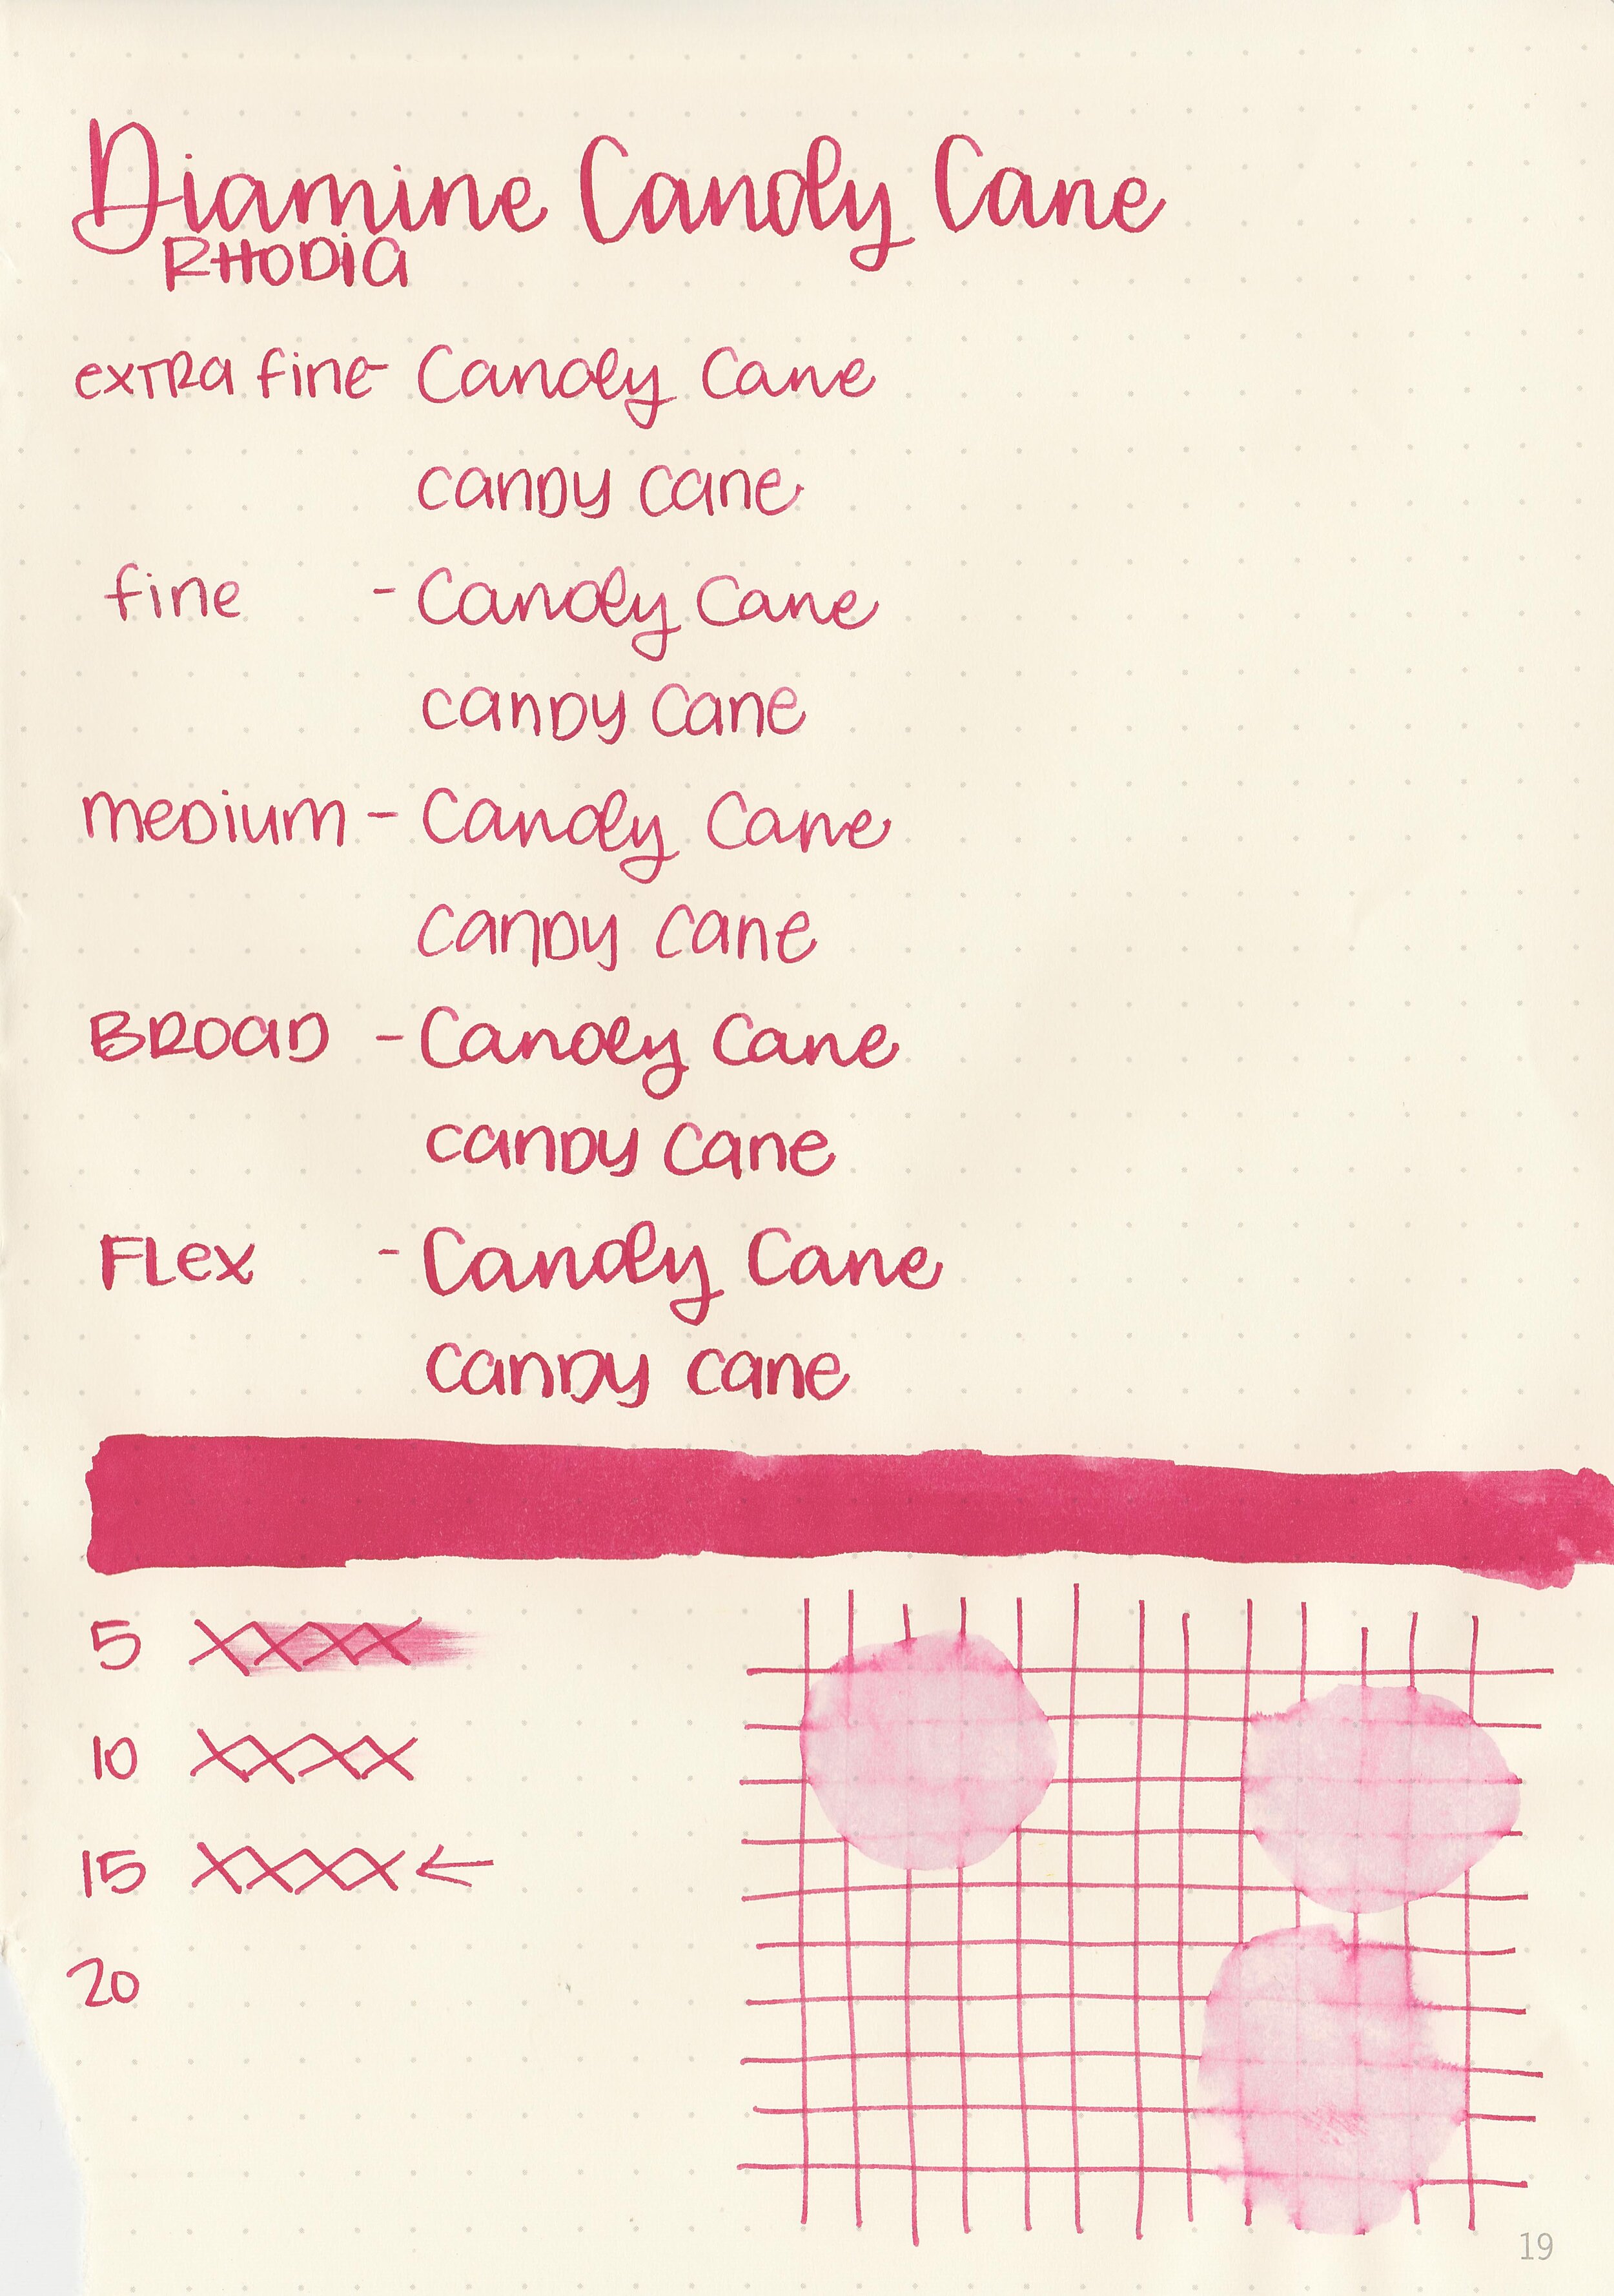 d-candy-cane-5.jpg